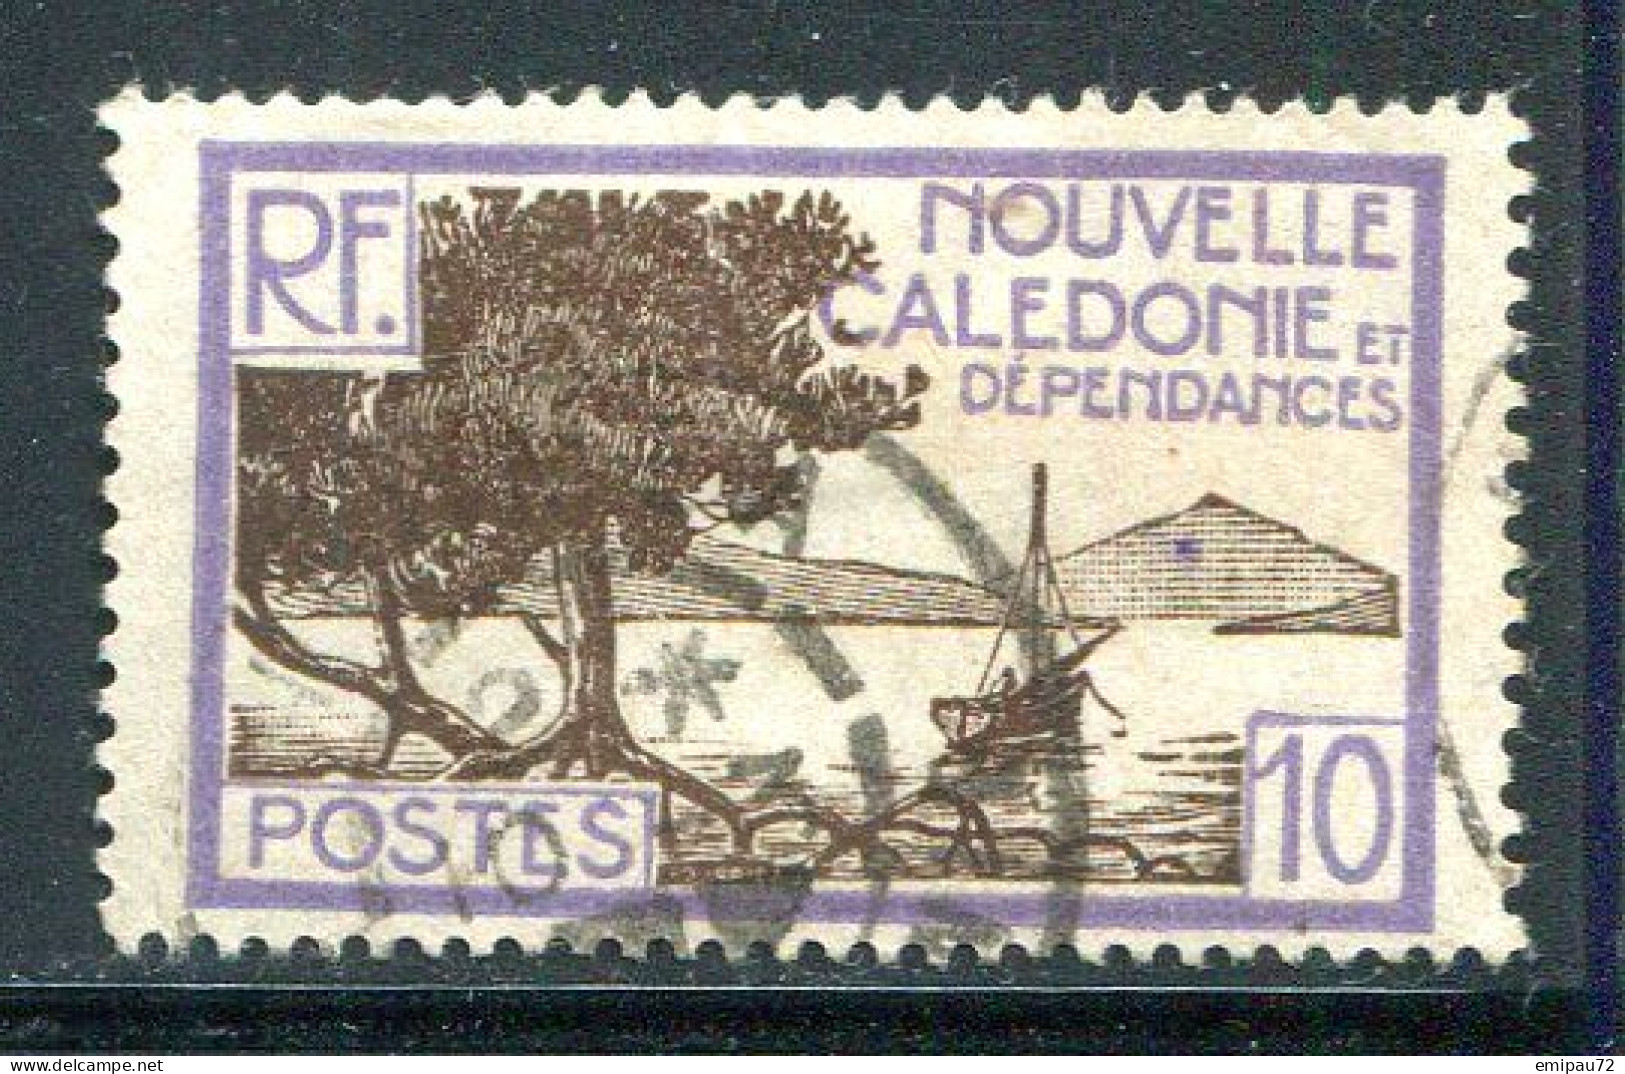 NOUVELLE CALEDONIE- Y&T N°143- Oblitéré - Used Stamps